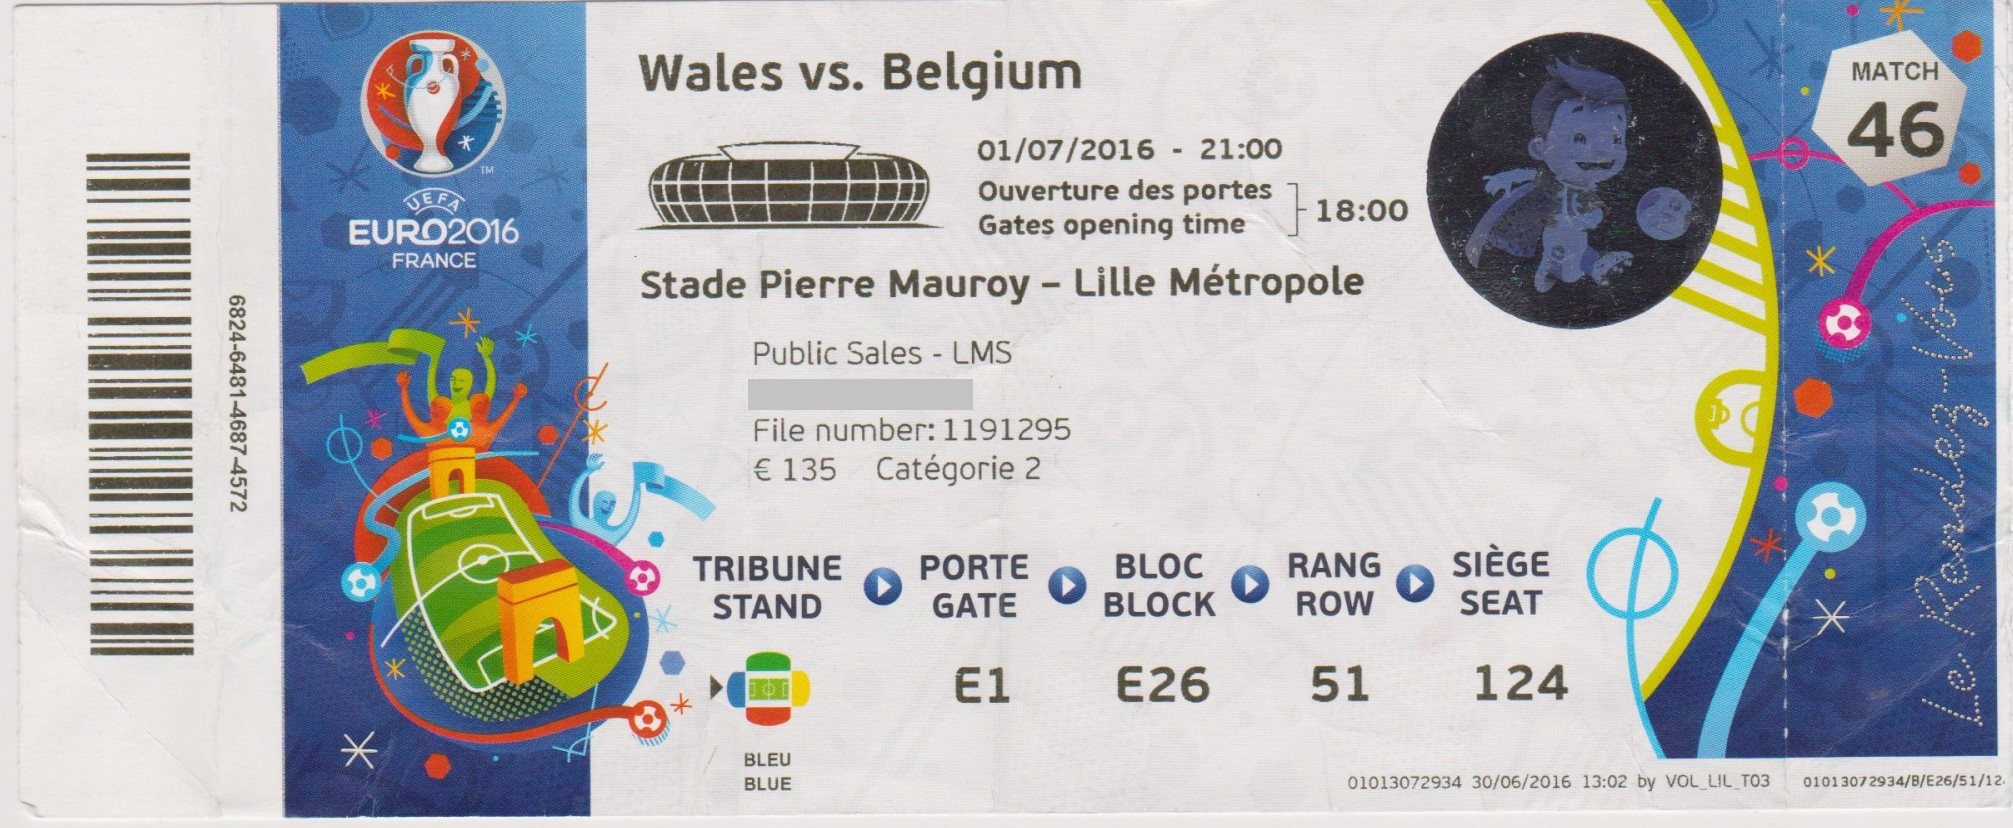 01/07/2016  Lille :  Pays de Galles  3 - 1  Belgique  > A. Williams,Robson-Kanu, Vokes (Pdg) -- Nainggolan (Bel)